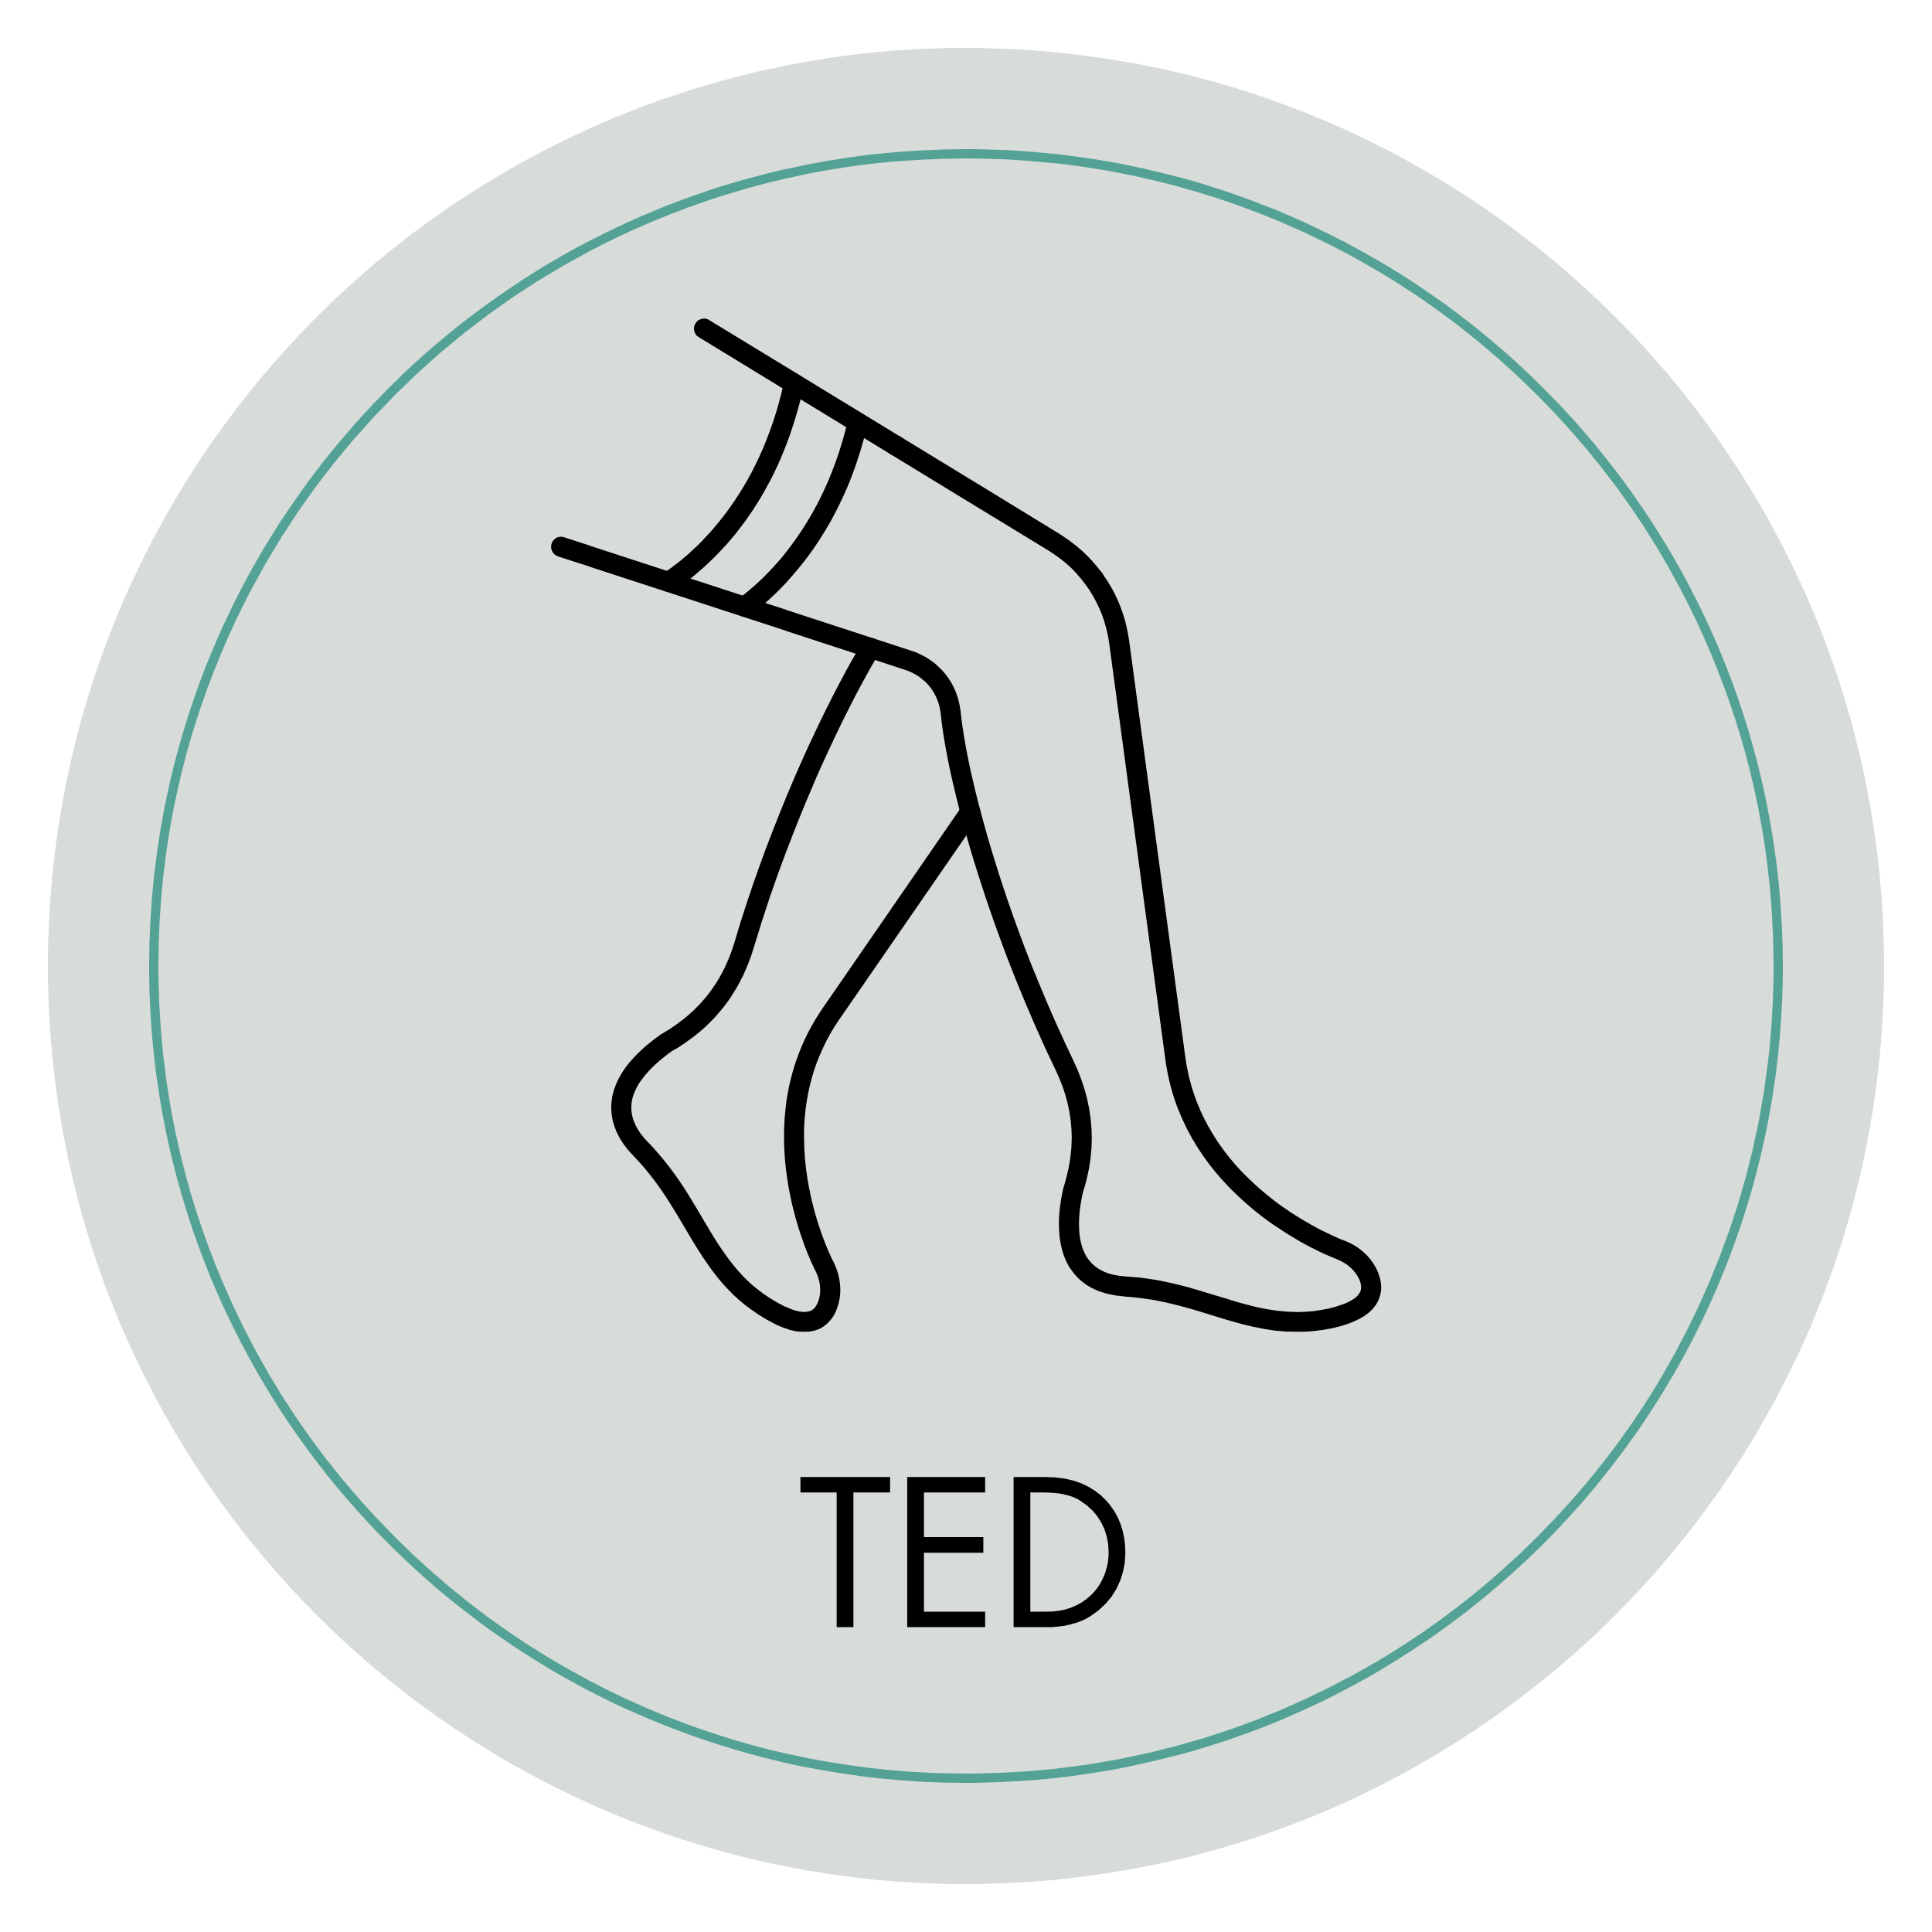 ABIRAM Thigh High Compression Stockings, Unisex Ted Hose Socks, 15